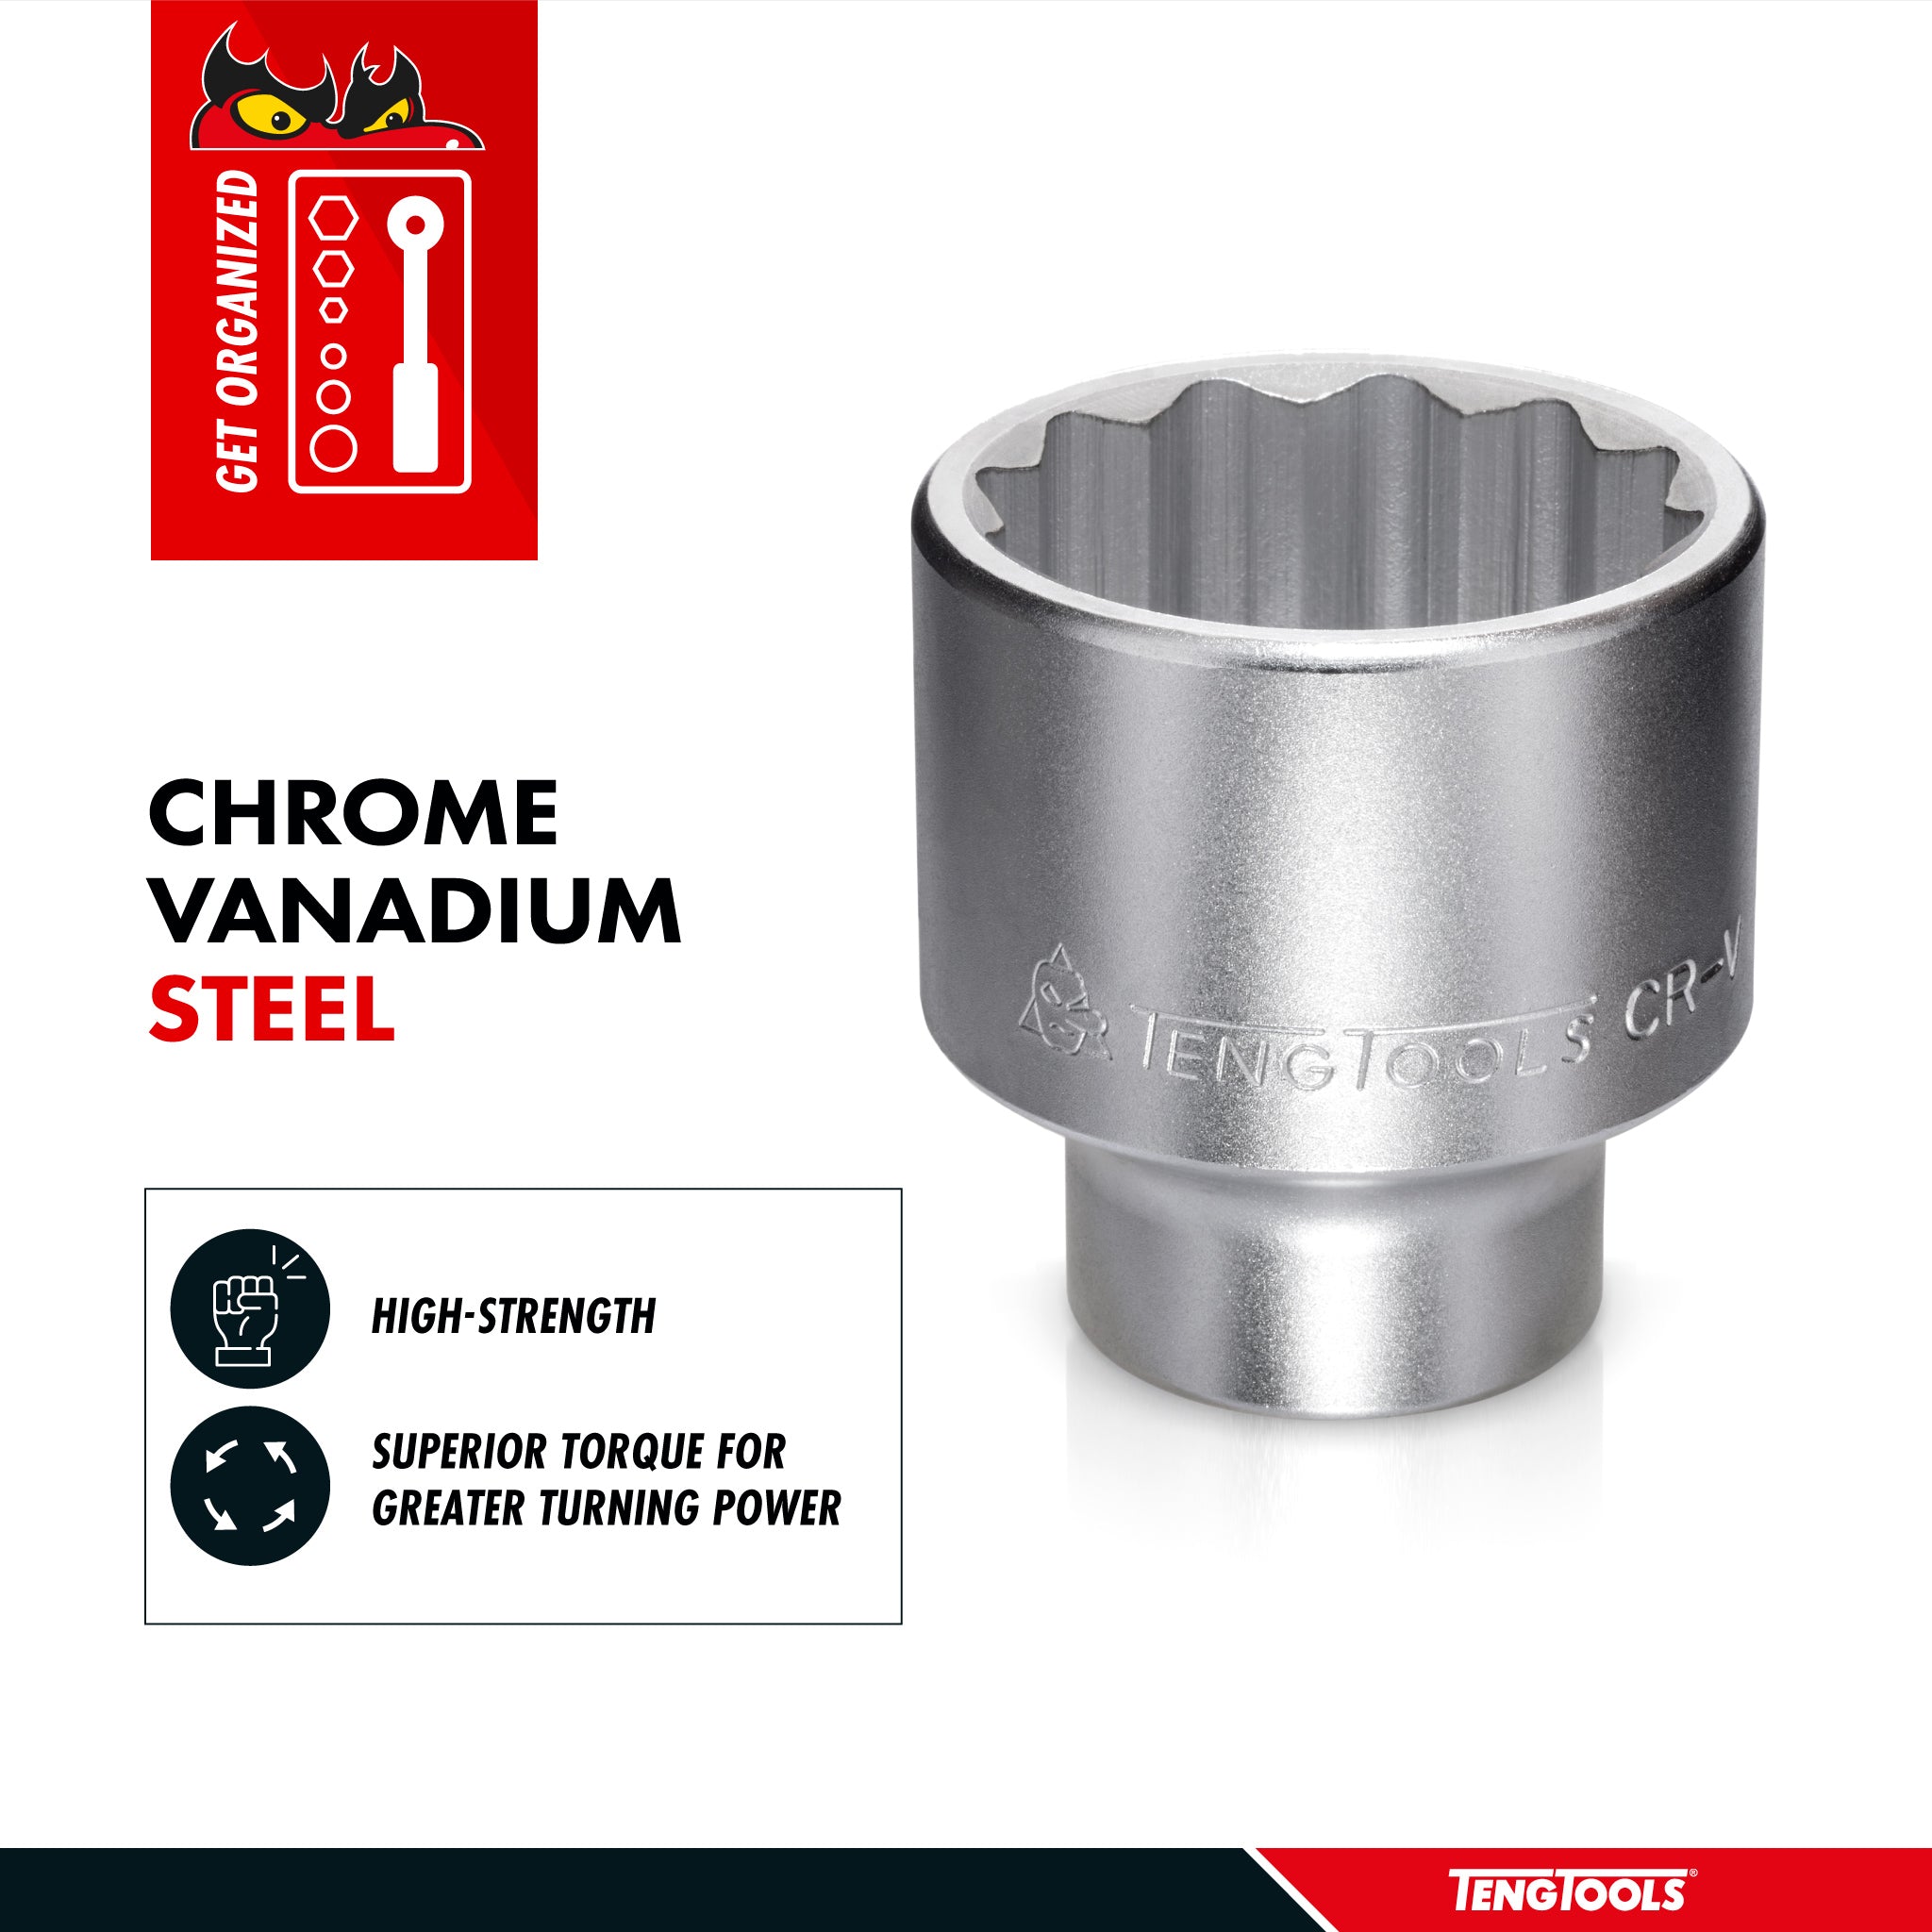 Teng Tools 1 Inch Drive 12 Point Metric Shallow Chrome Vanadium Sockets - 46mm